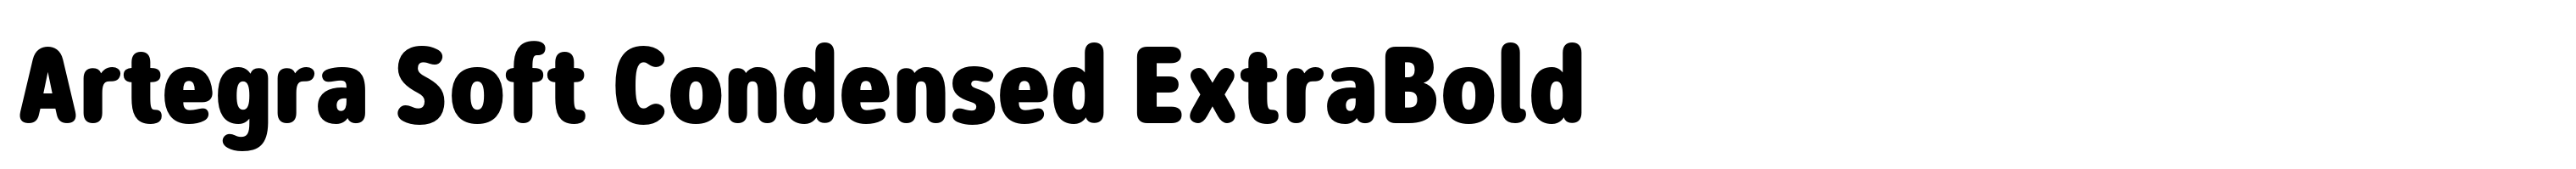 Artegra Soft Condensed ExtraBold